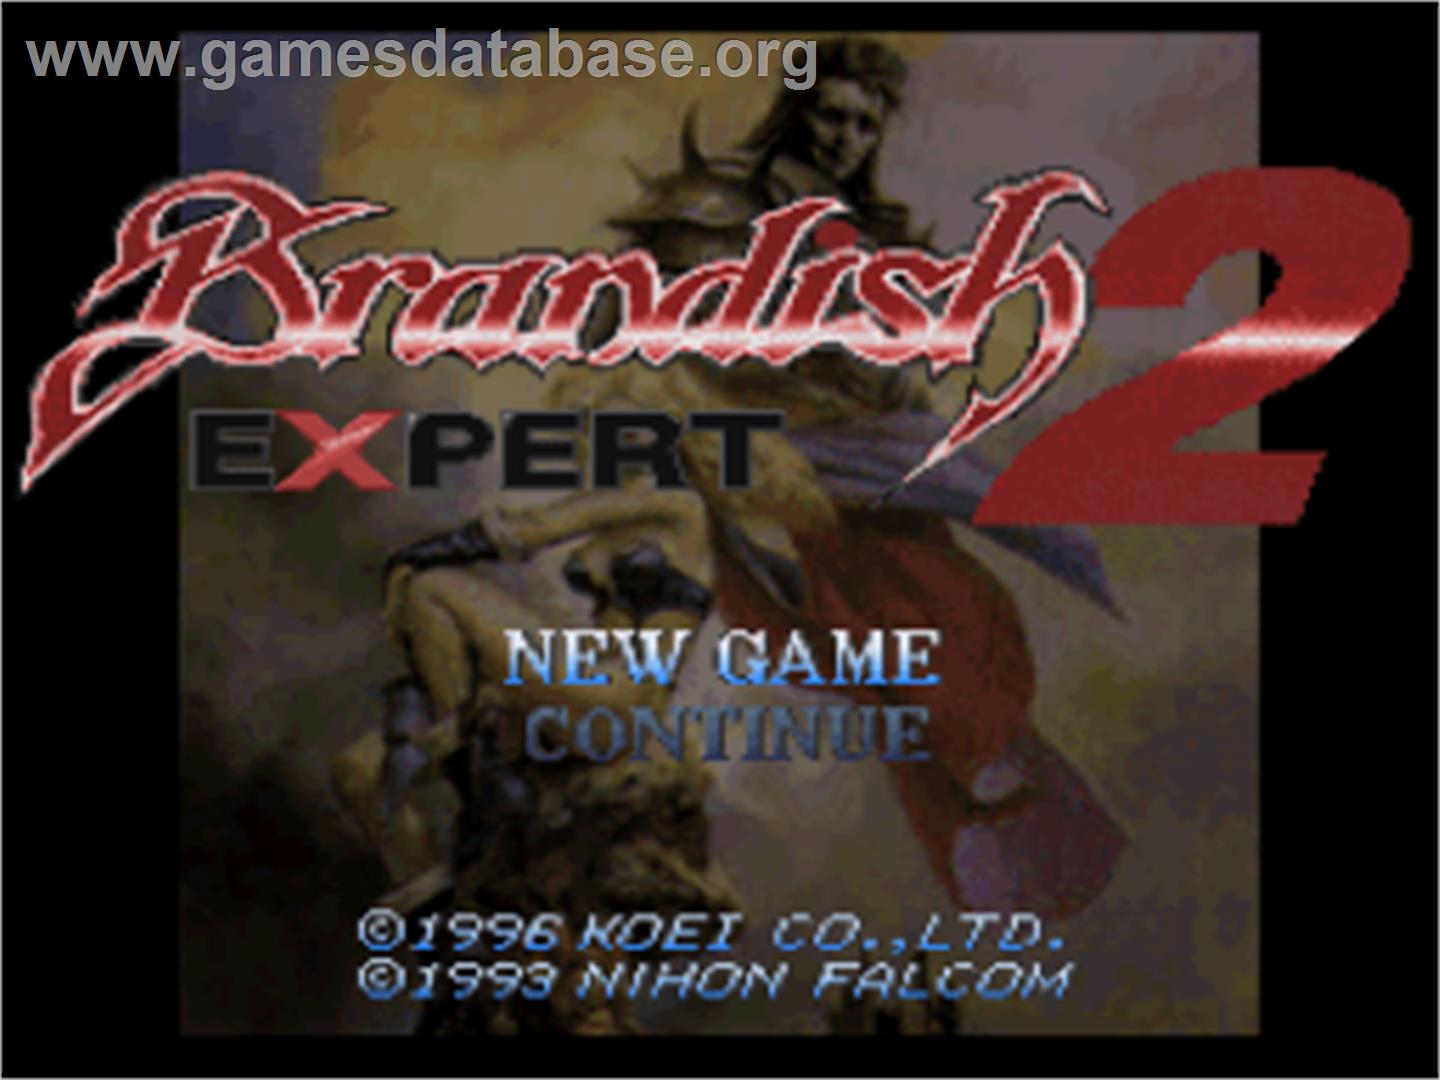 Brandish 2: Expert - Nintendo SNES - Artwork - Title Screen